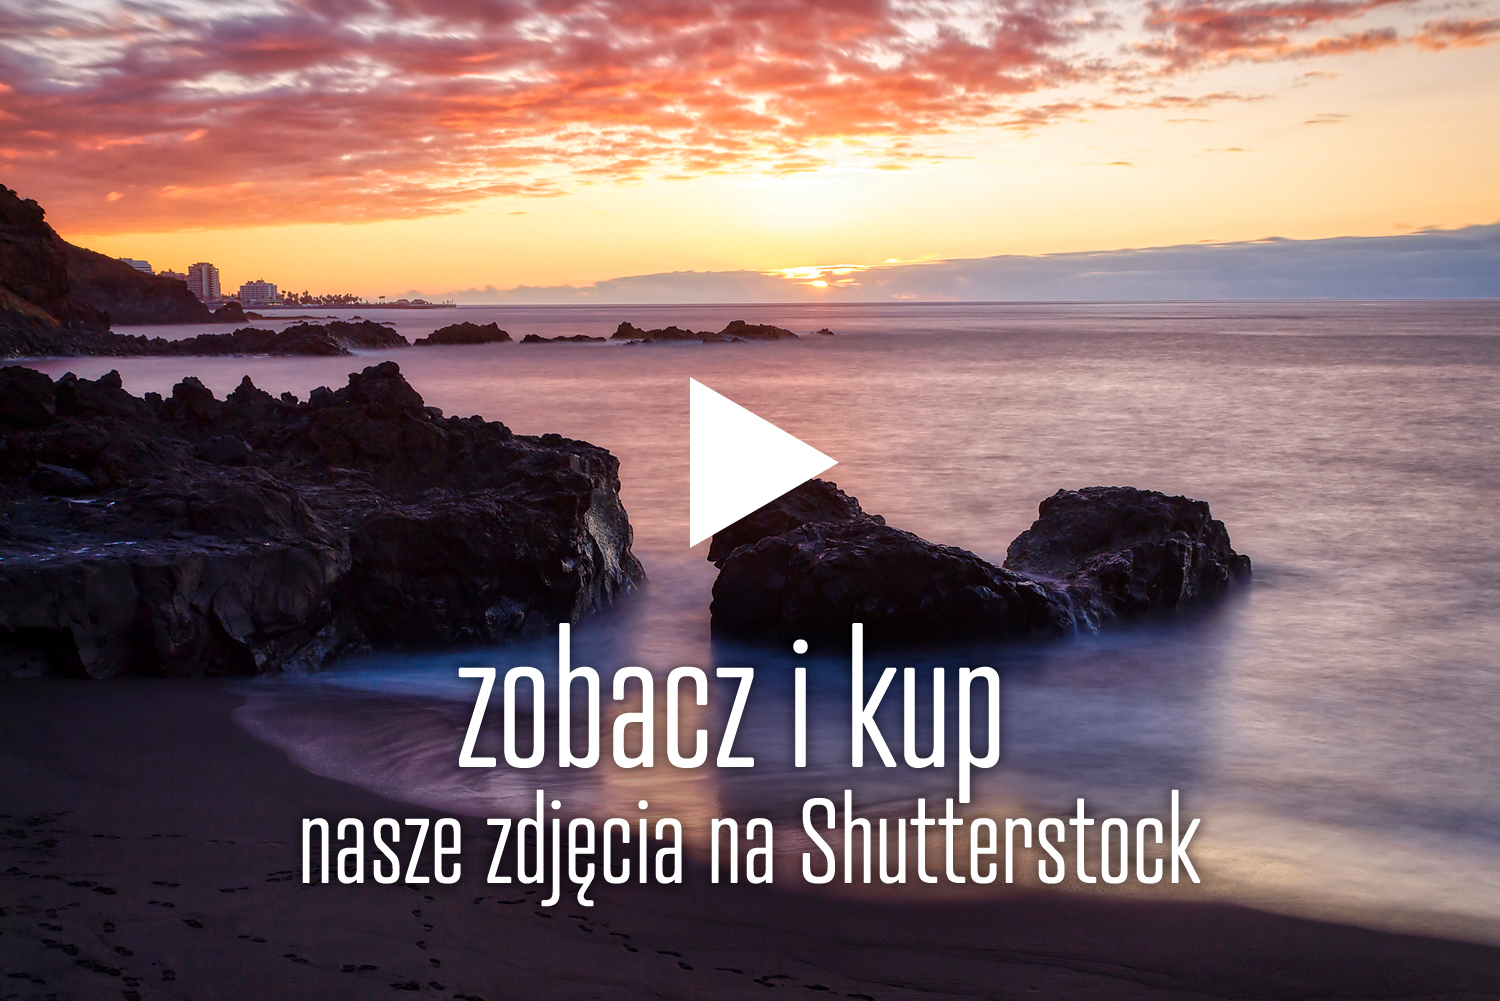 zdj臋cia Shutterstock